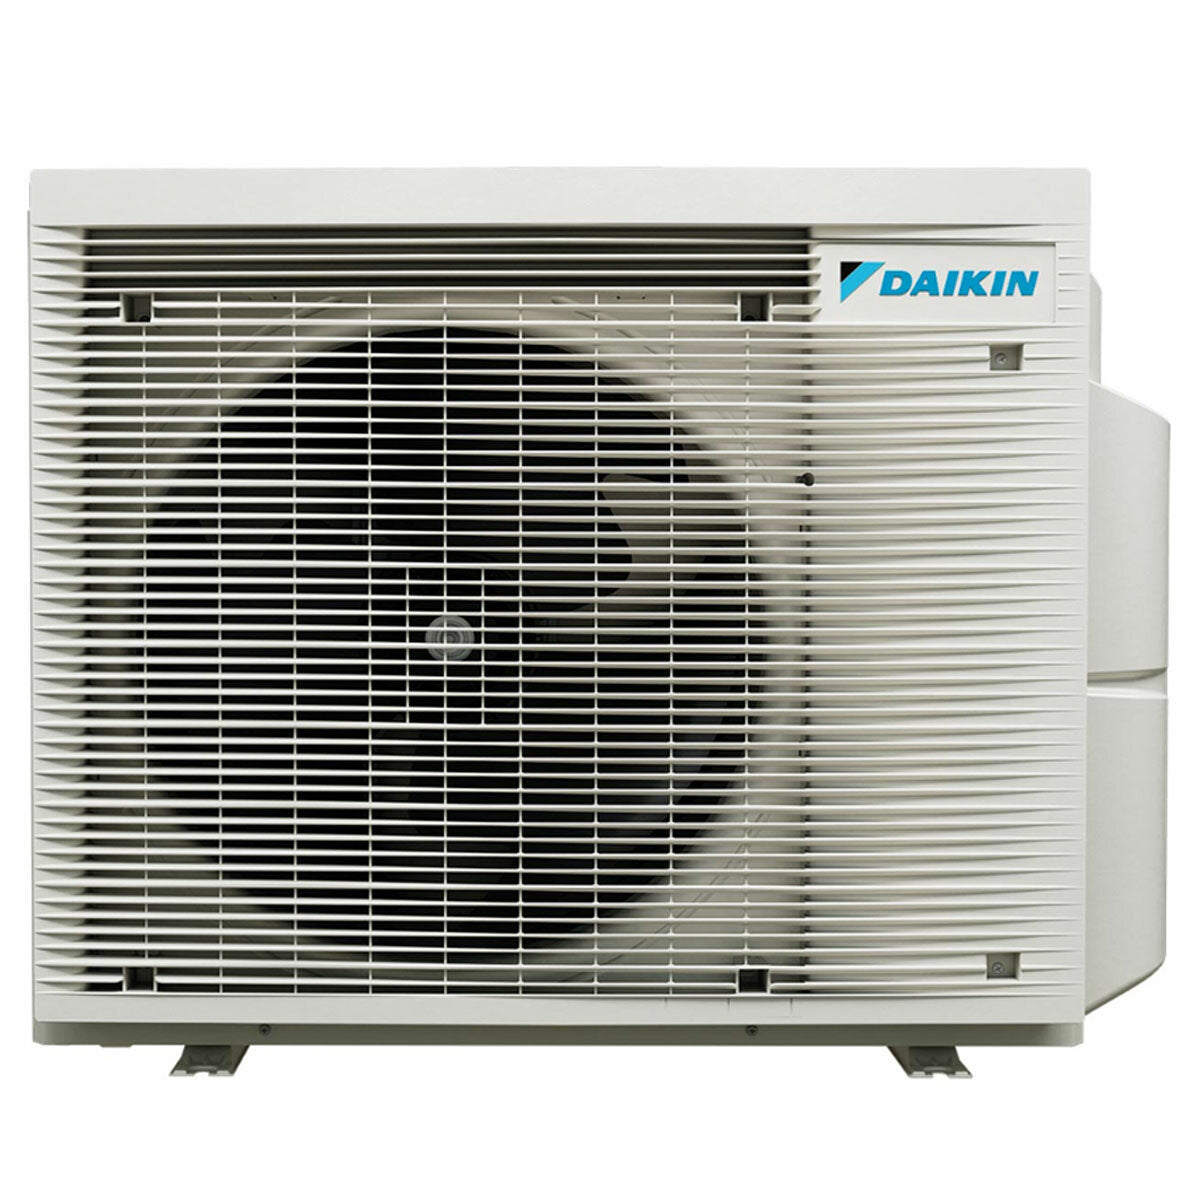 Daikin Mini Sky FDXM-F9 ducted air conditioner trial split 9000+9000+12000 BTU inverter A++ external 6.8 kW